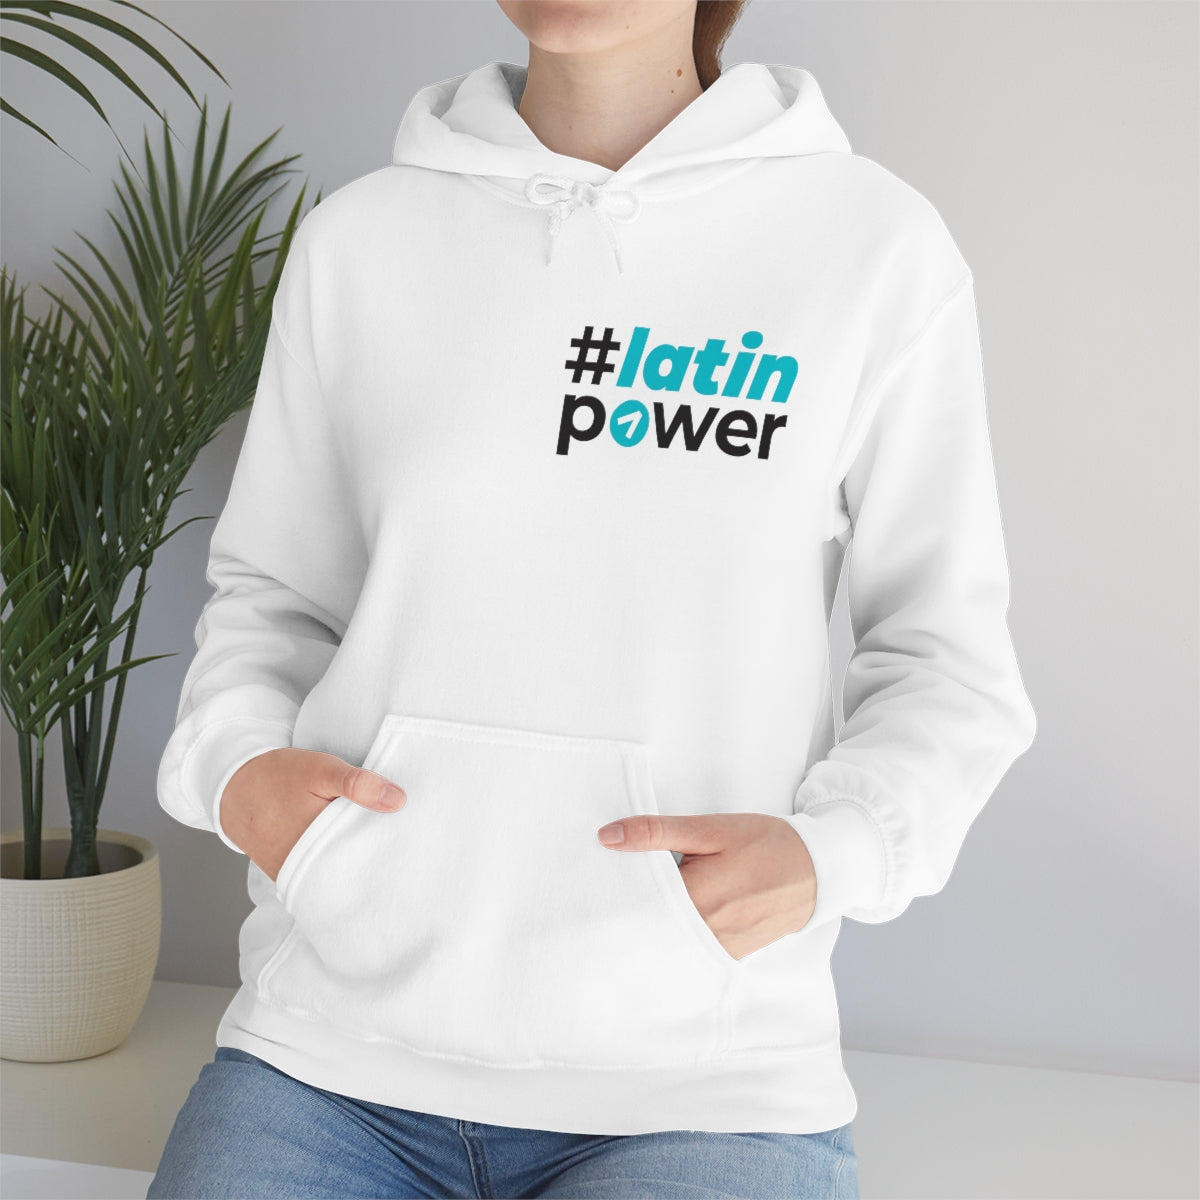 #Latinapower - Light Blue - Unisex Heavy Blend™ Hooded Sweatshirt